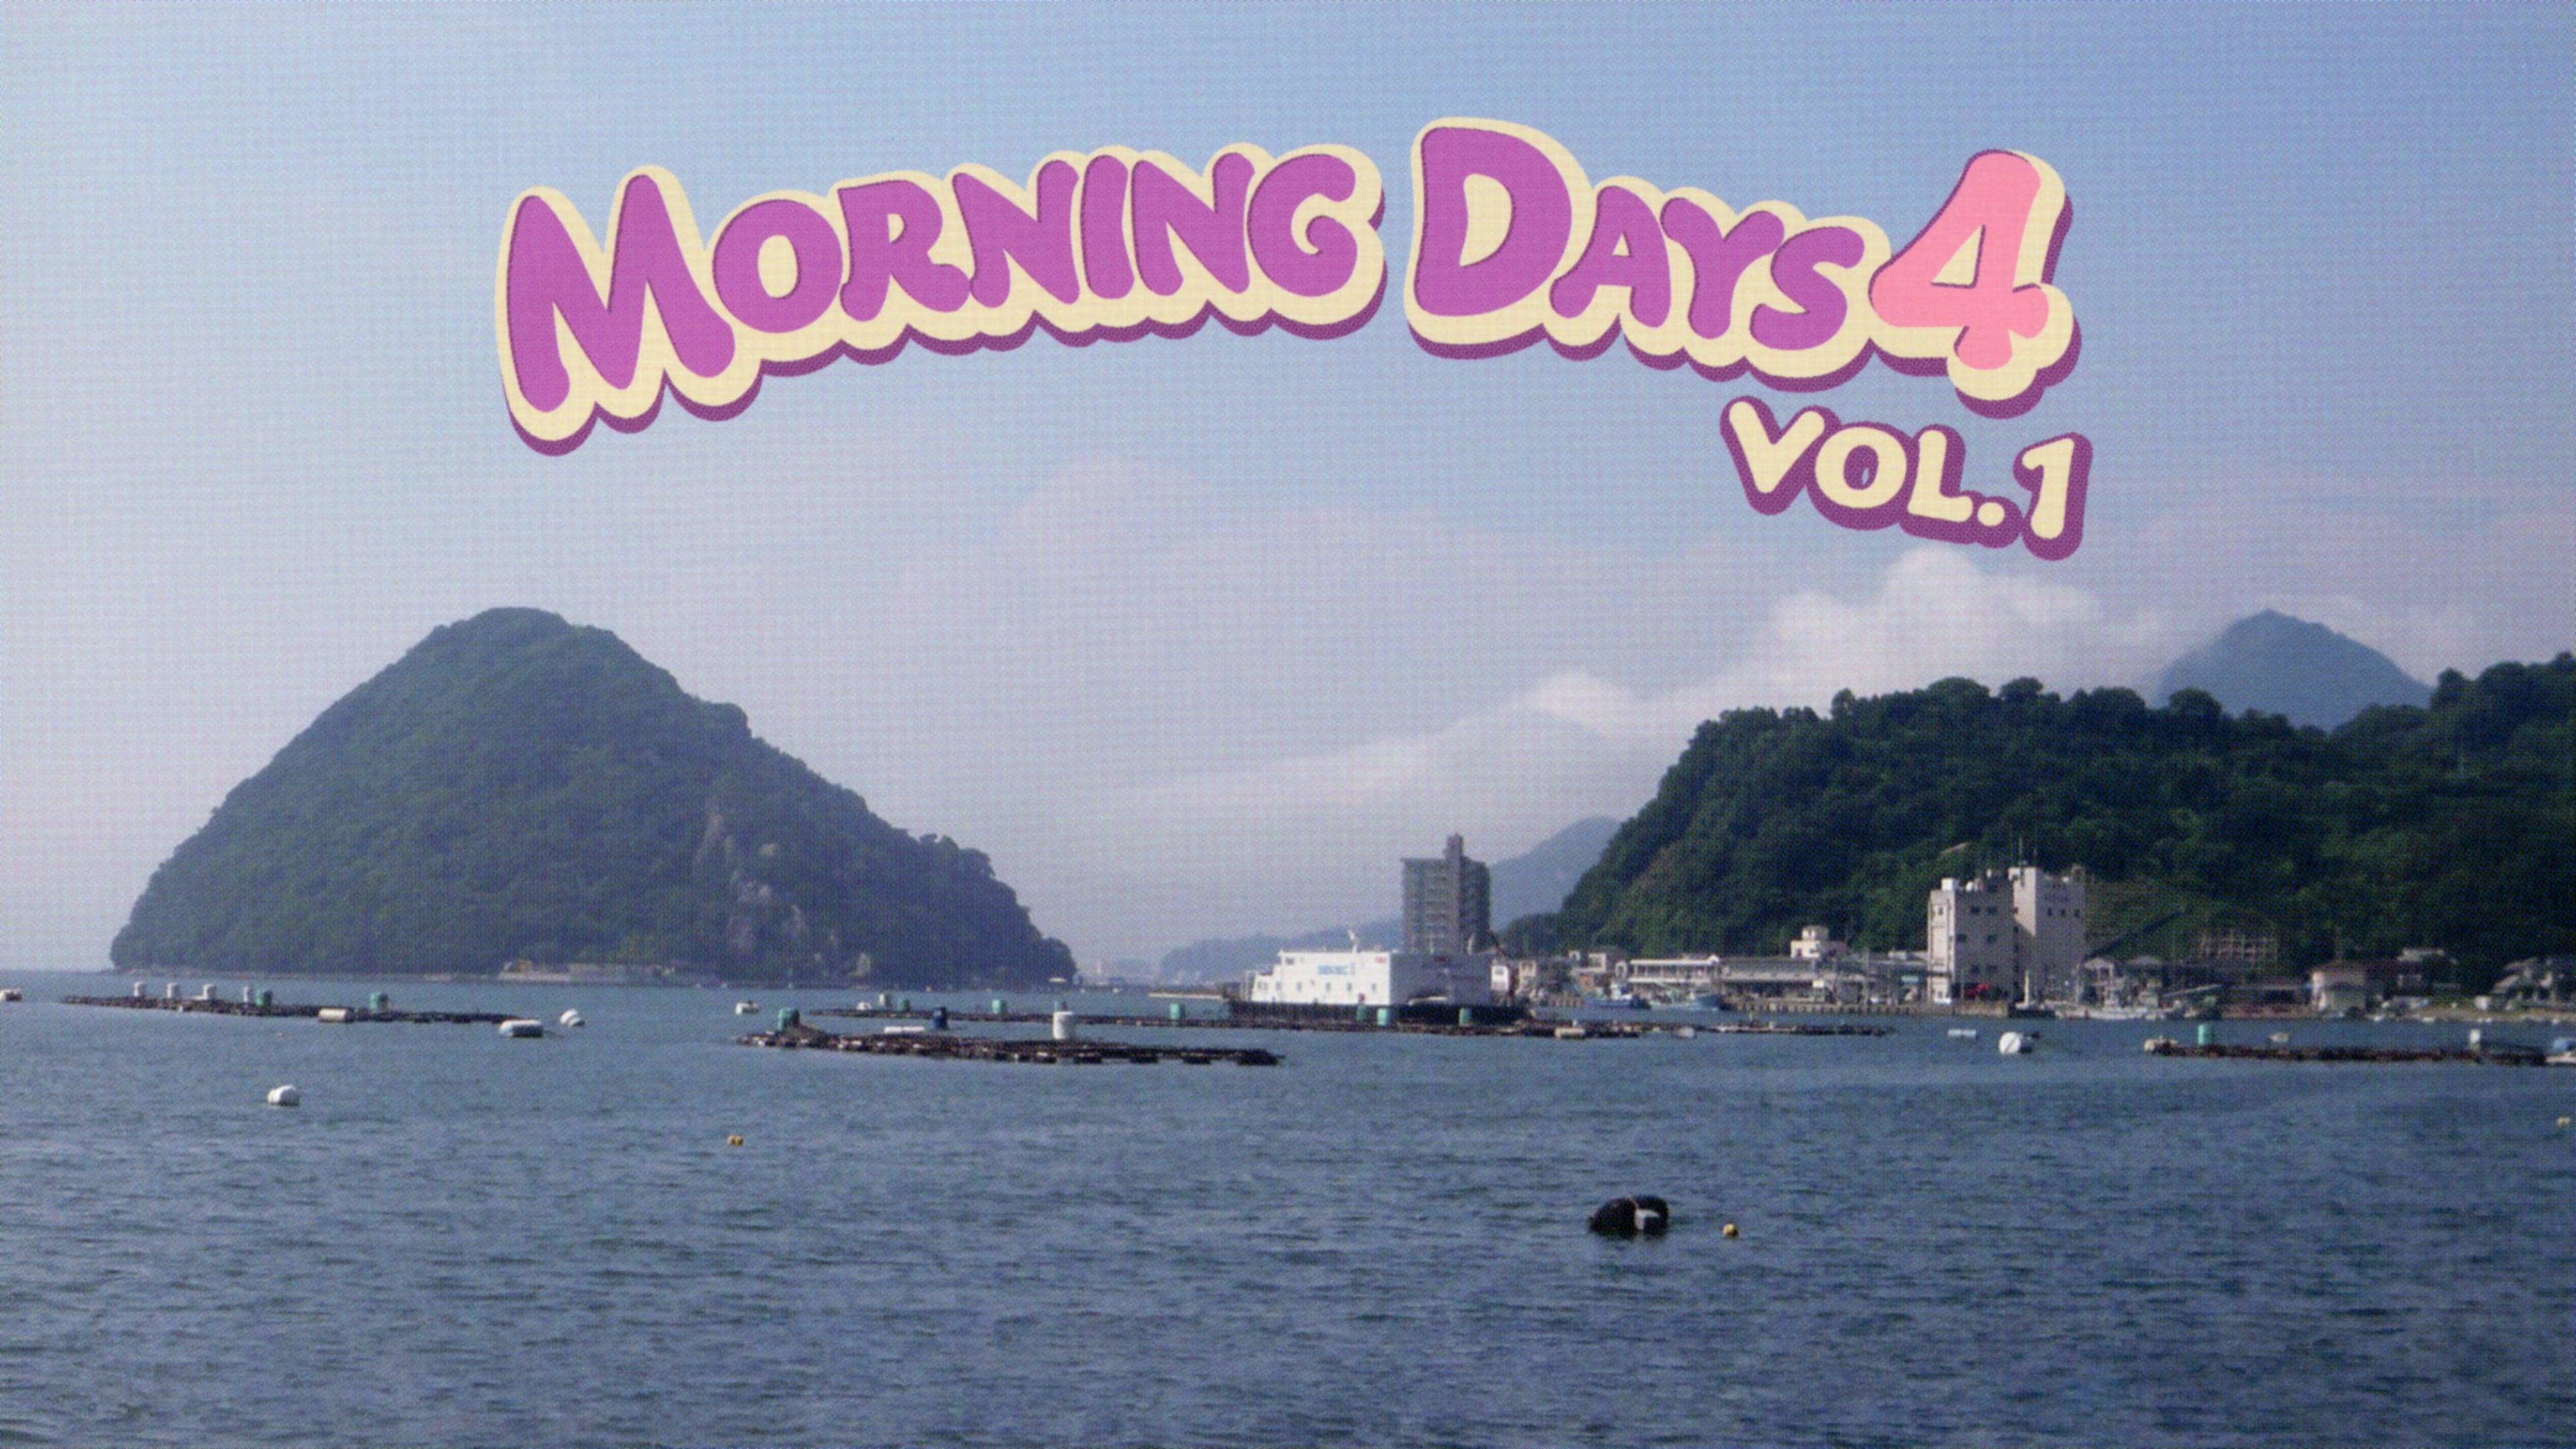 Morning Days 4 Vol.1 backdrop